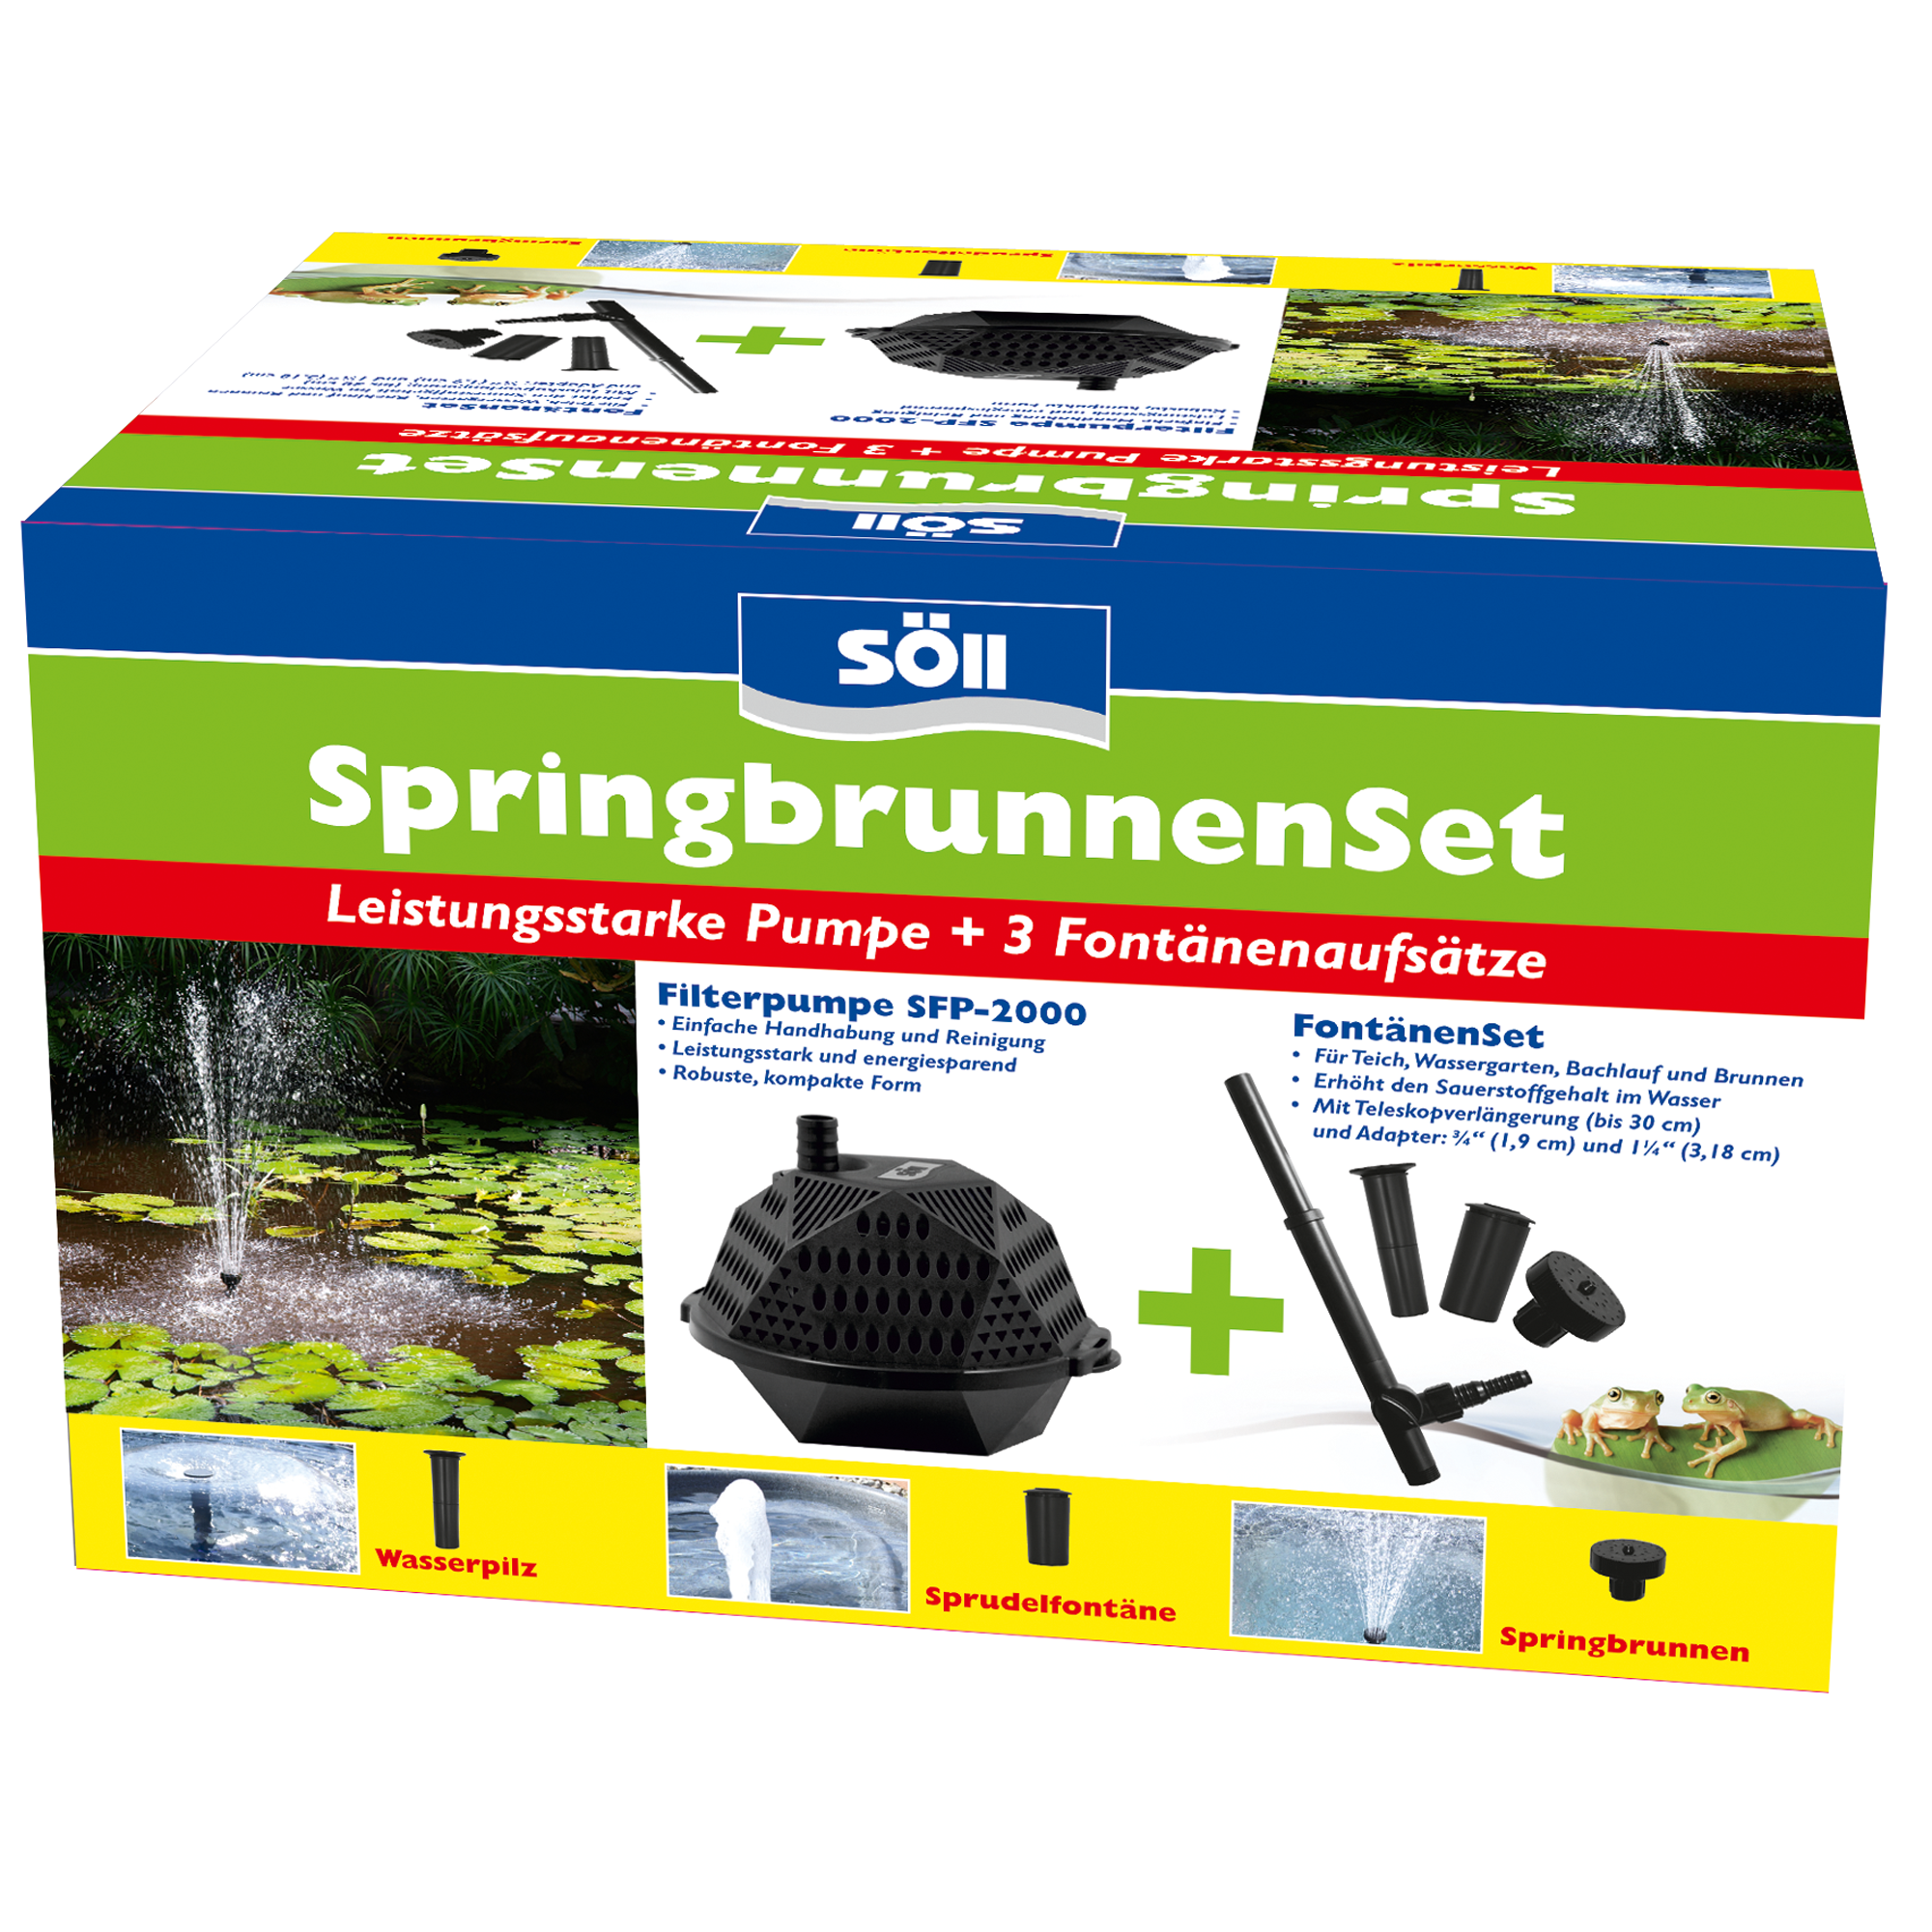 Springbrunnen-Set 2-teilig + product picture